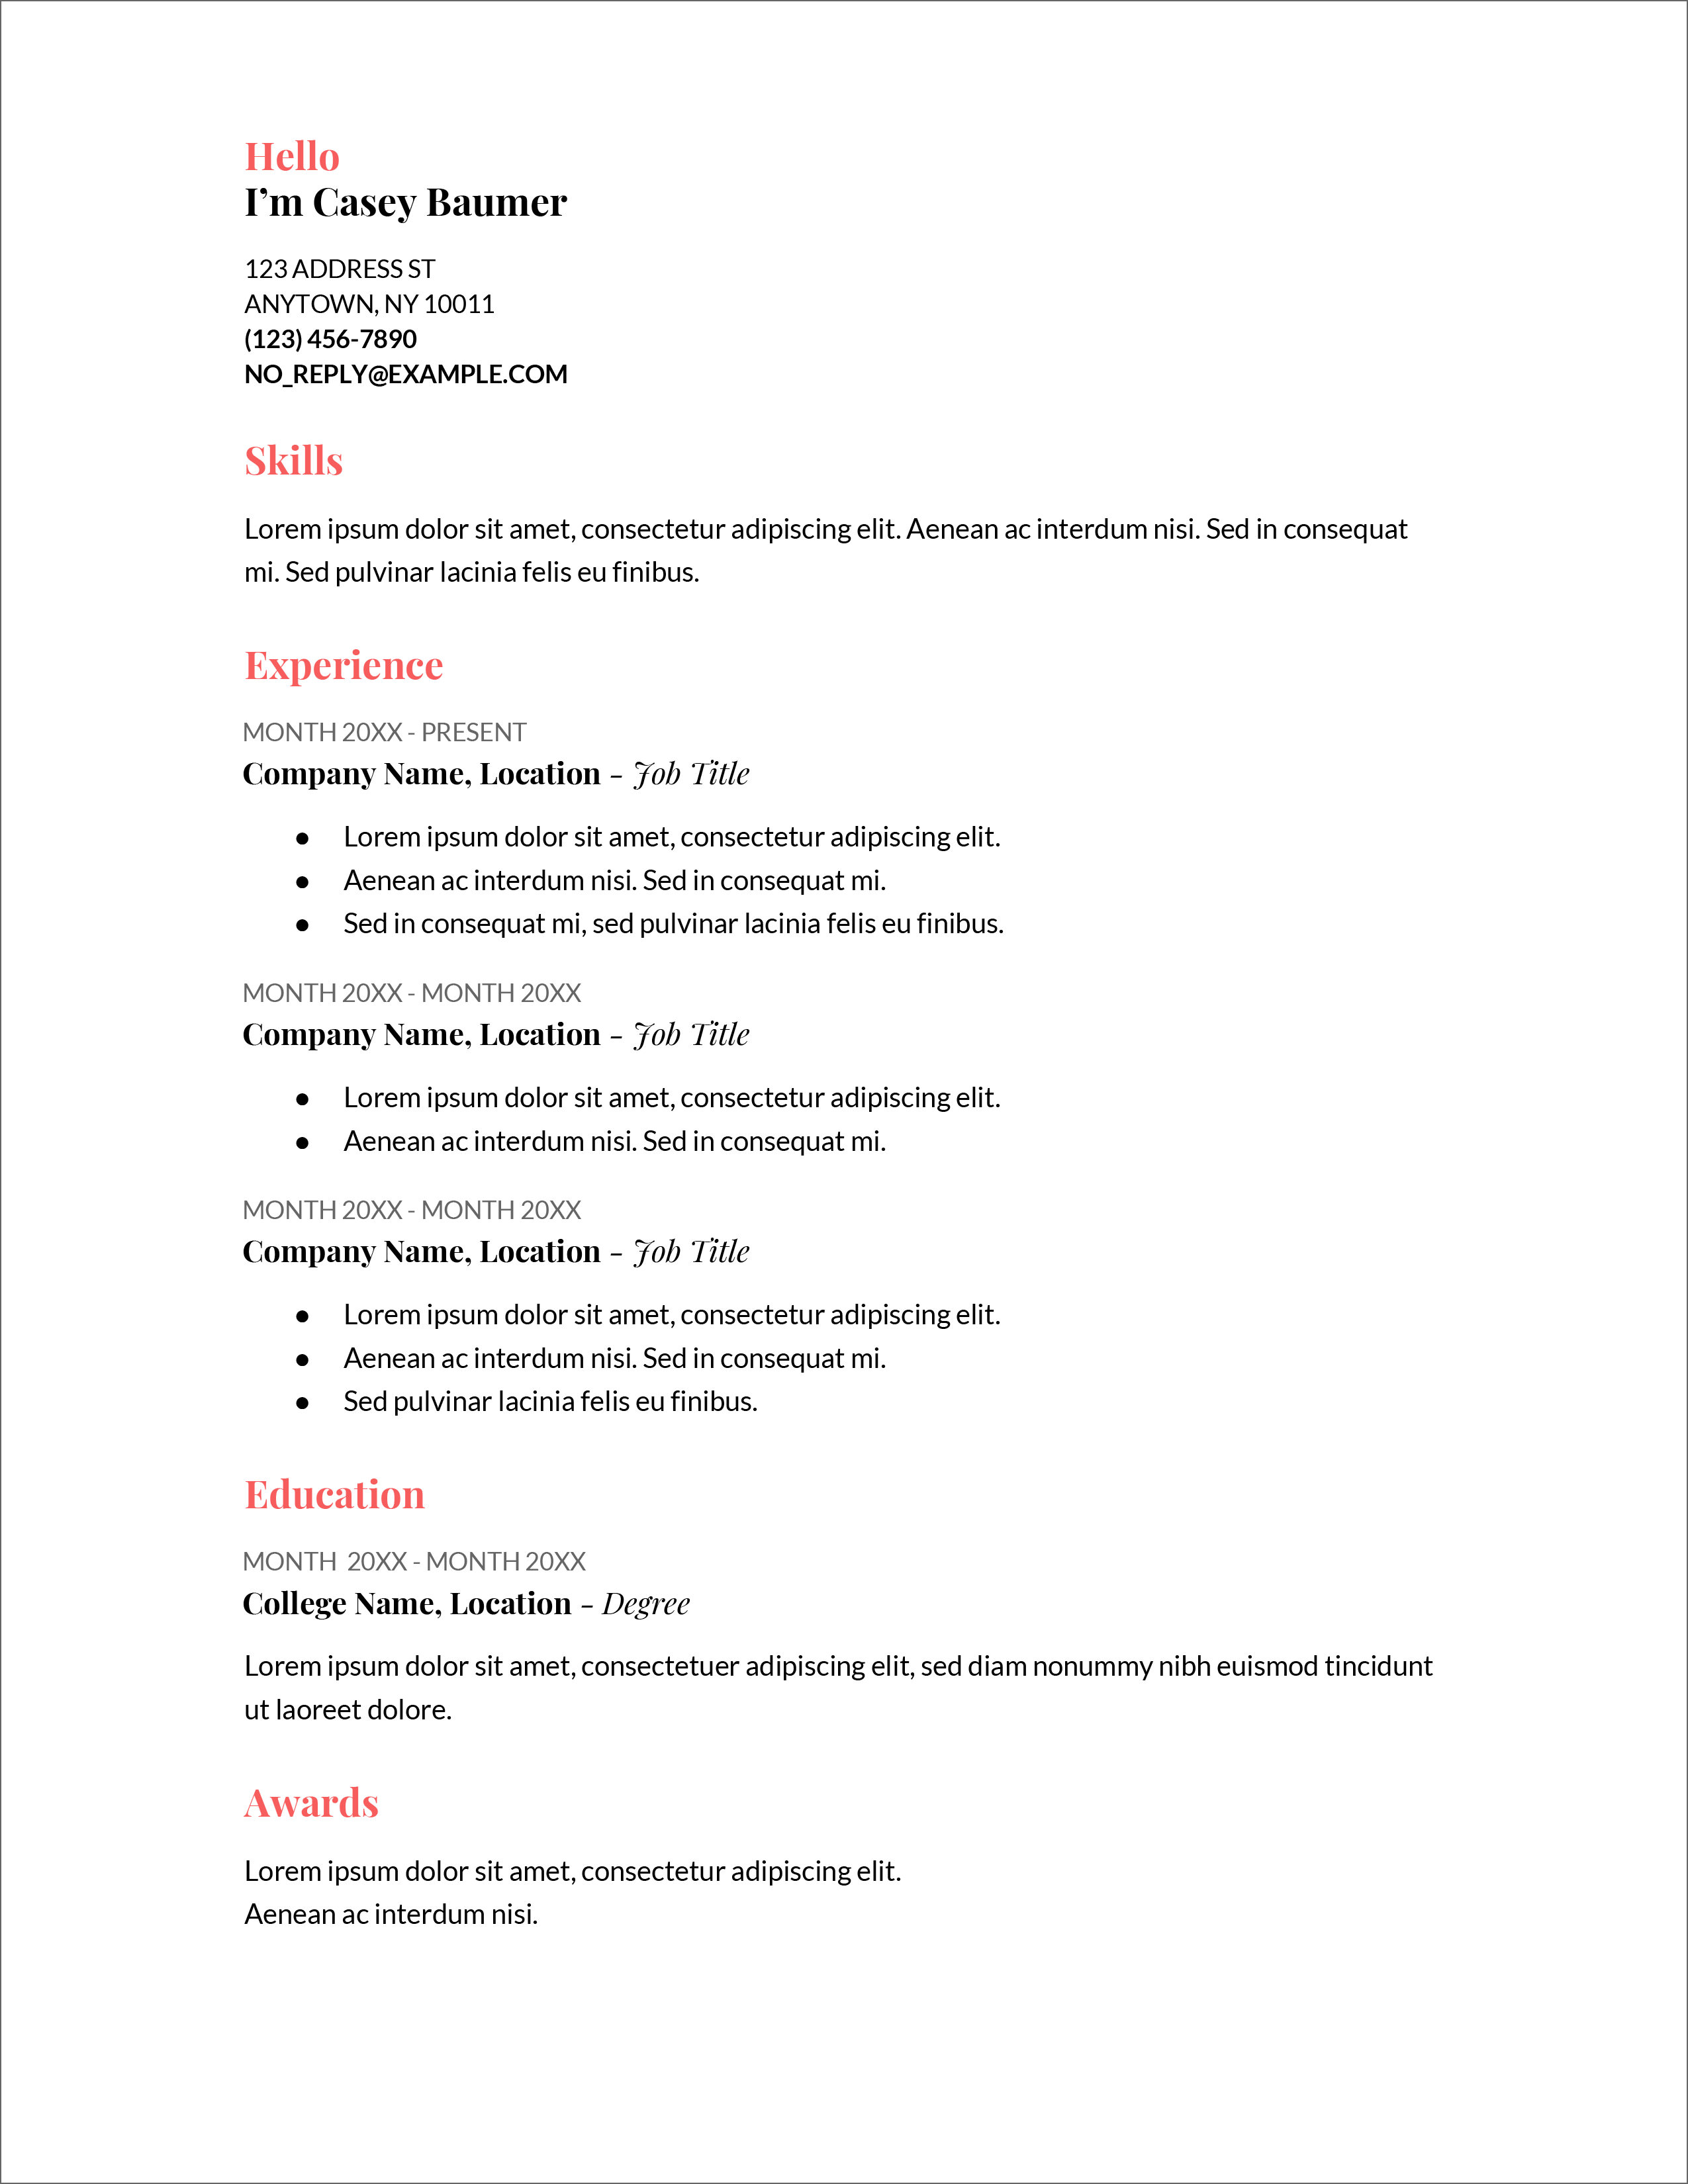 45 Free Modern Resume / CV Templates Minimalist, Simple & Clean Design